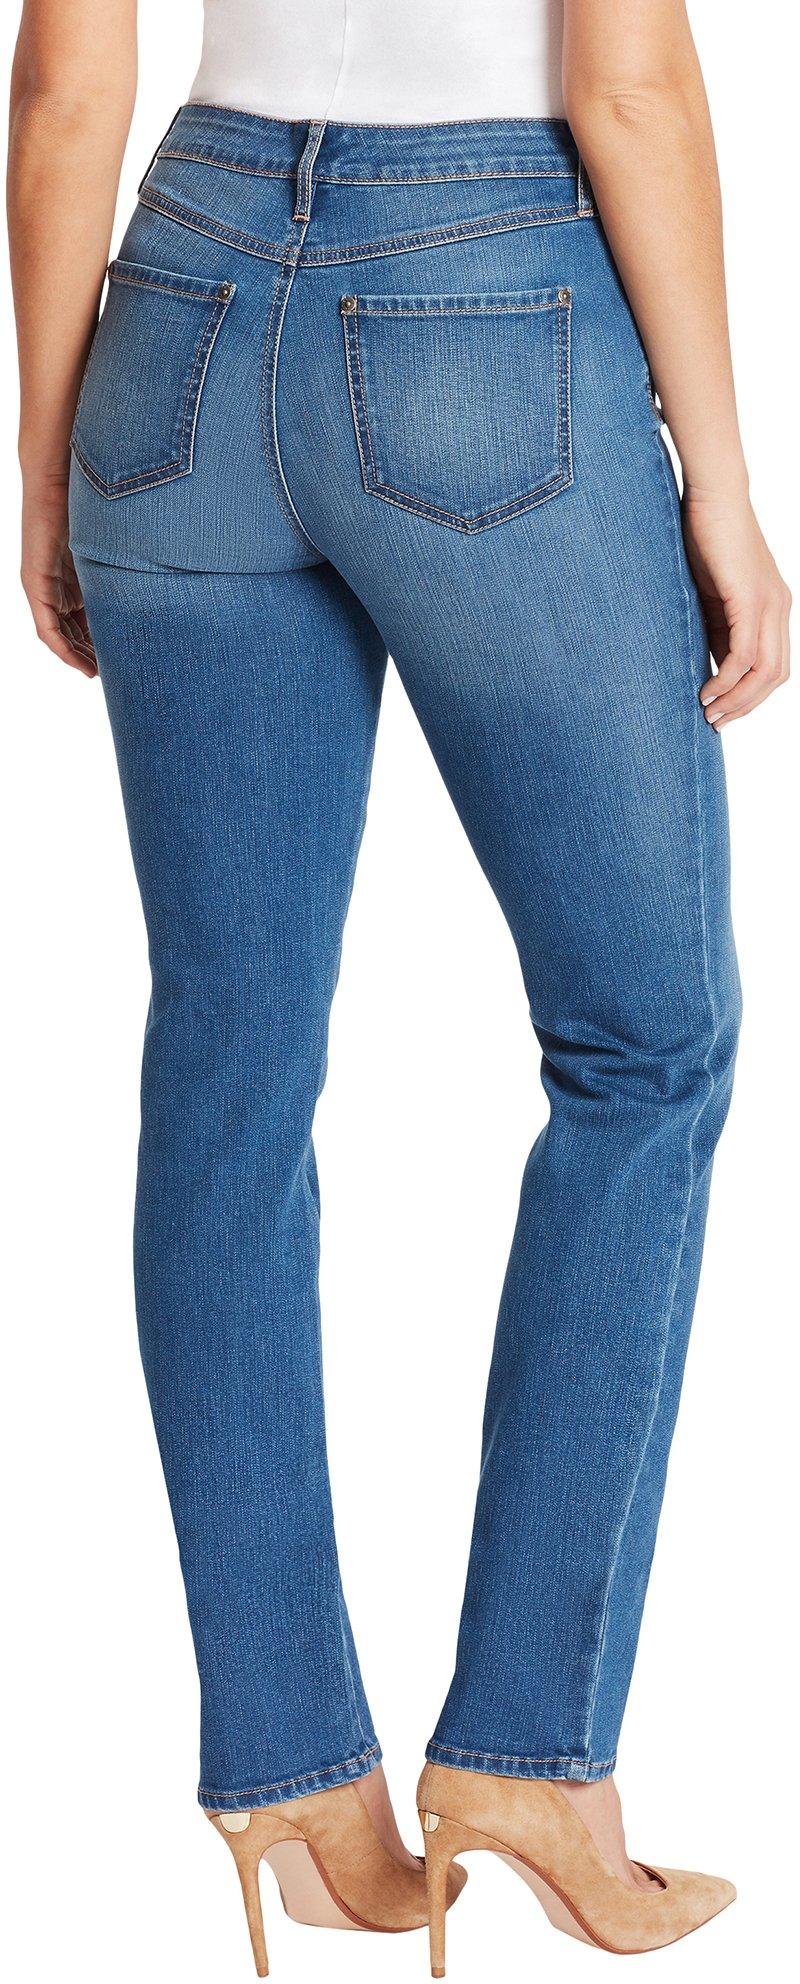 gloria vanderbilt all around slimming effect rail straight jeans